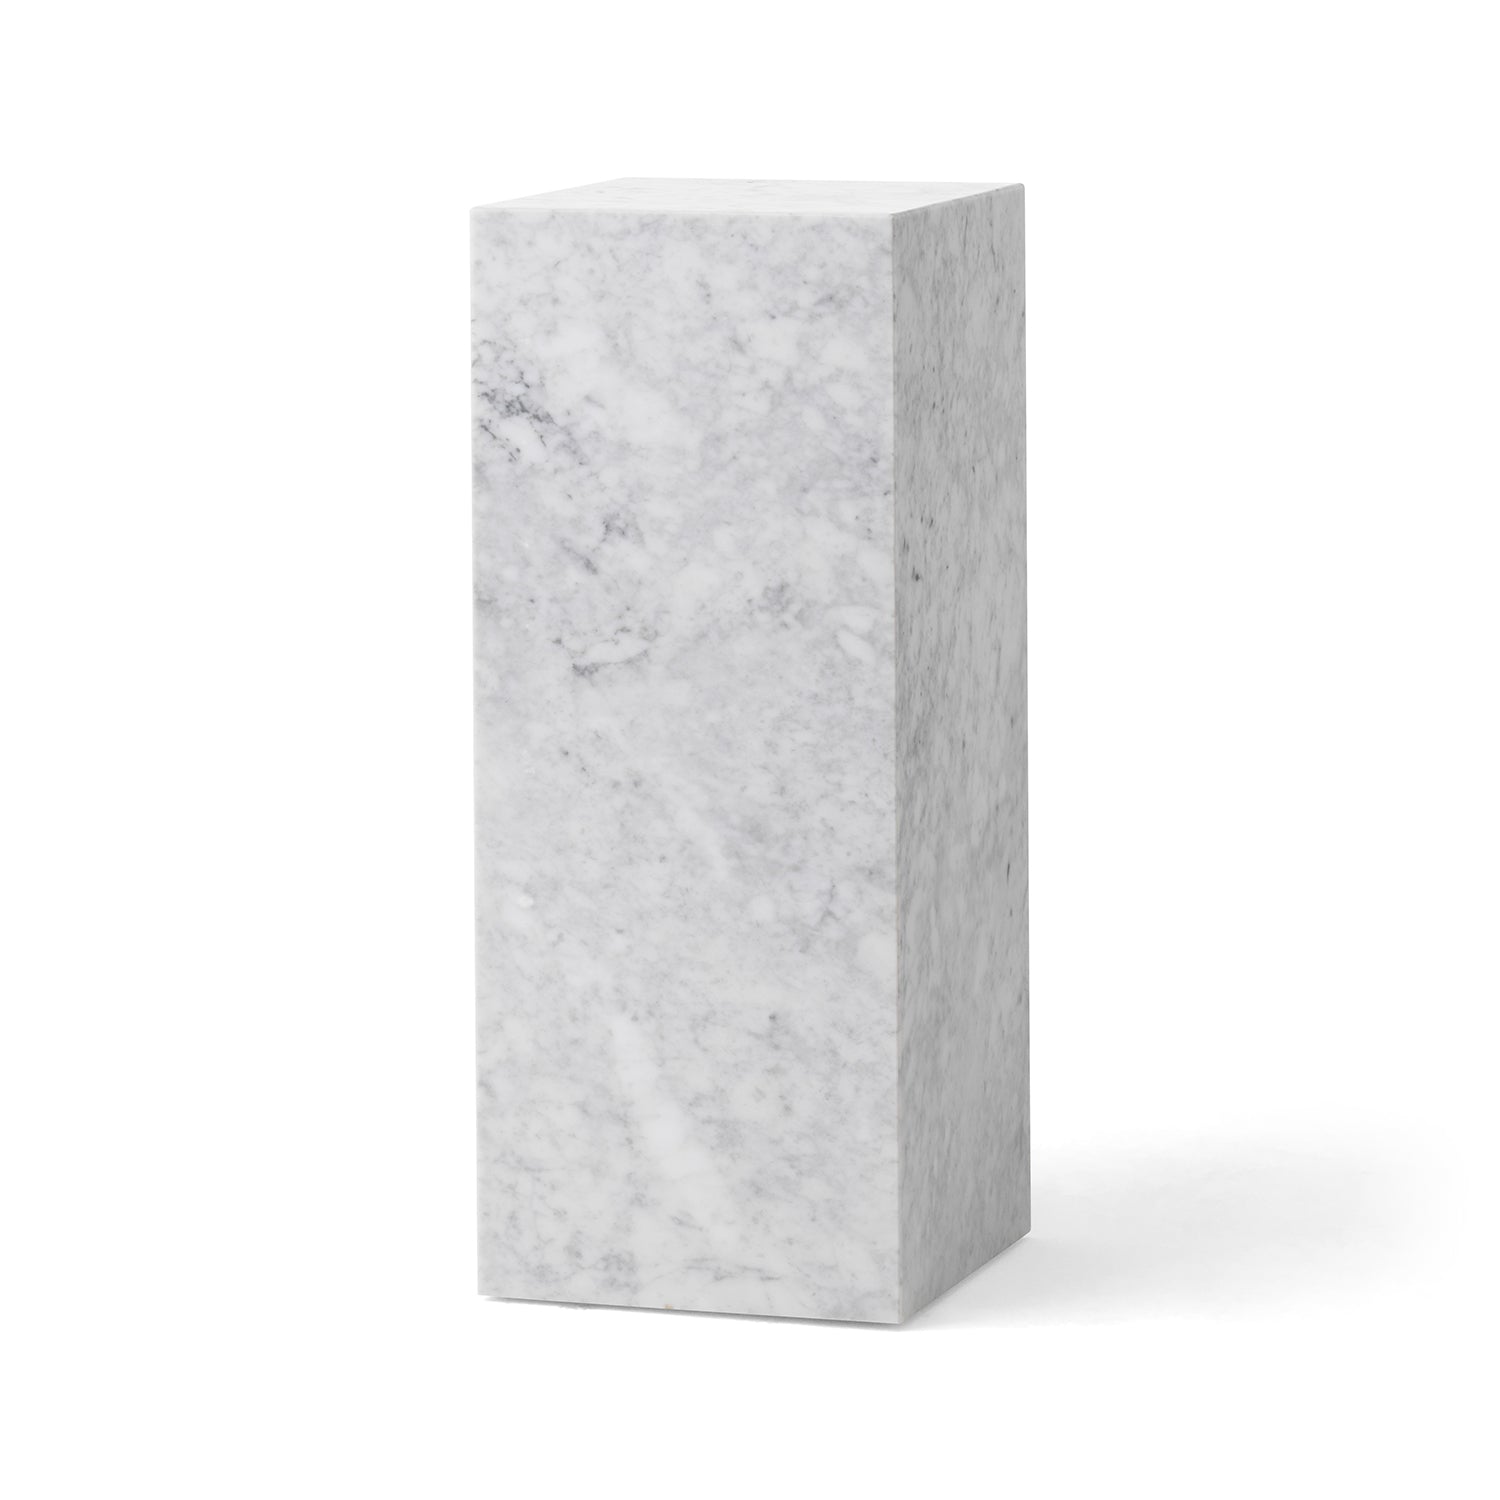 Plinth Pedestal - The Design Choice